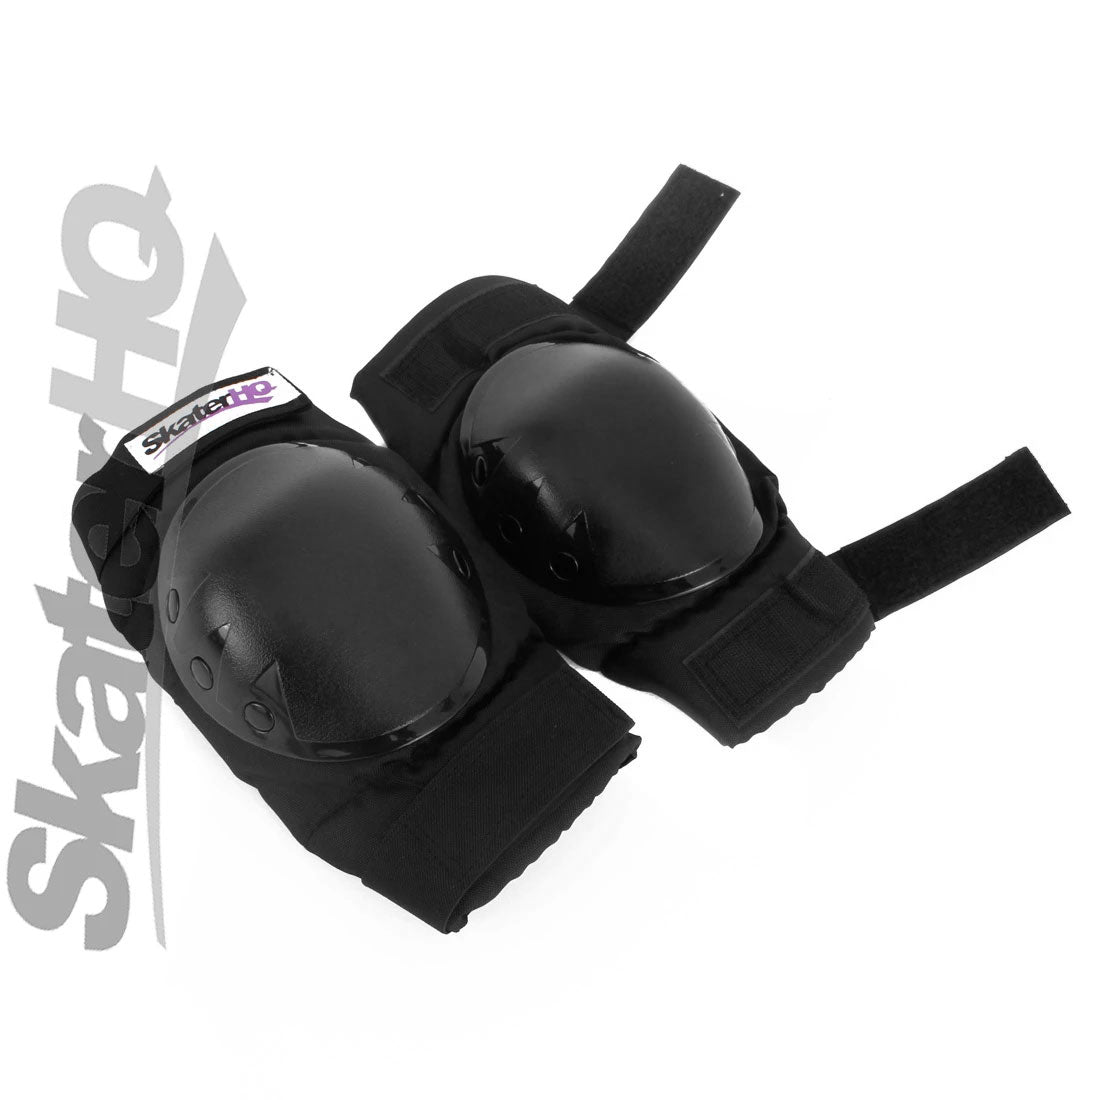 Skater HQ Knee/Elbow Set - Medium Protective Gear